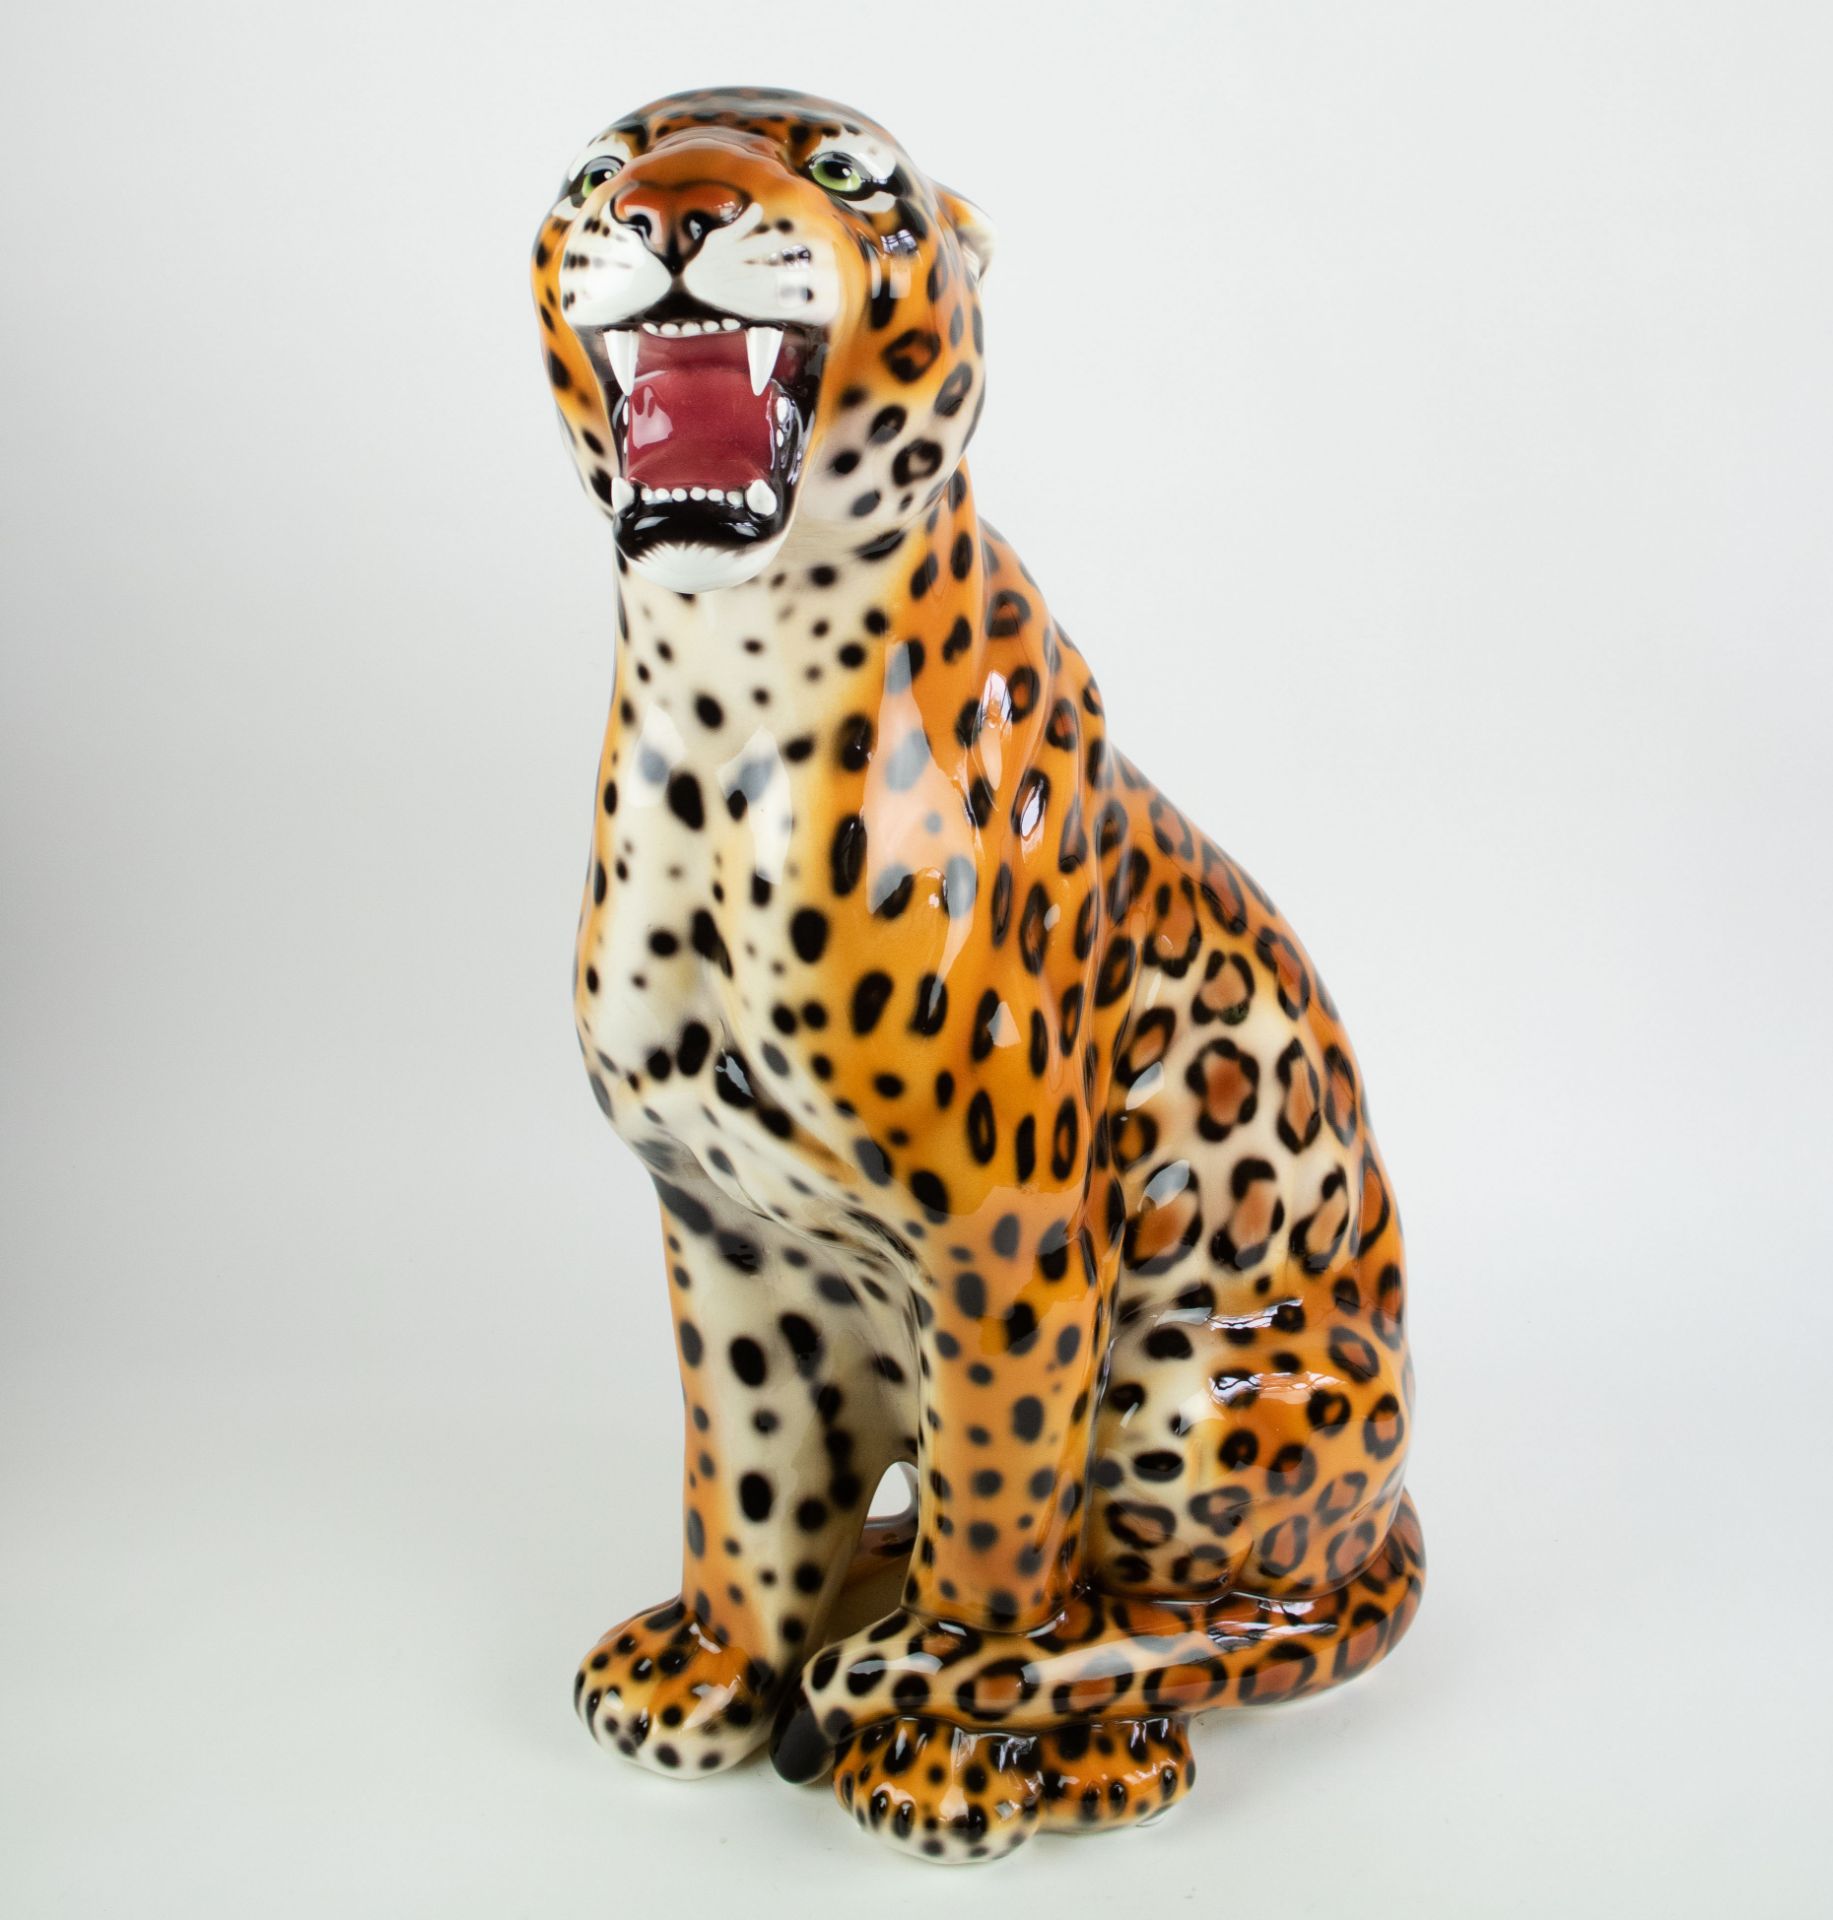 Italian Ceramic sculpture of a leopard